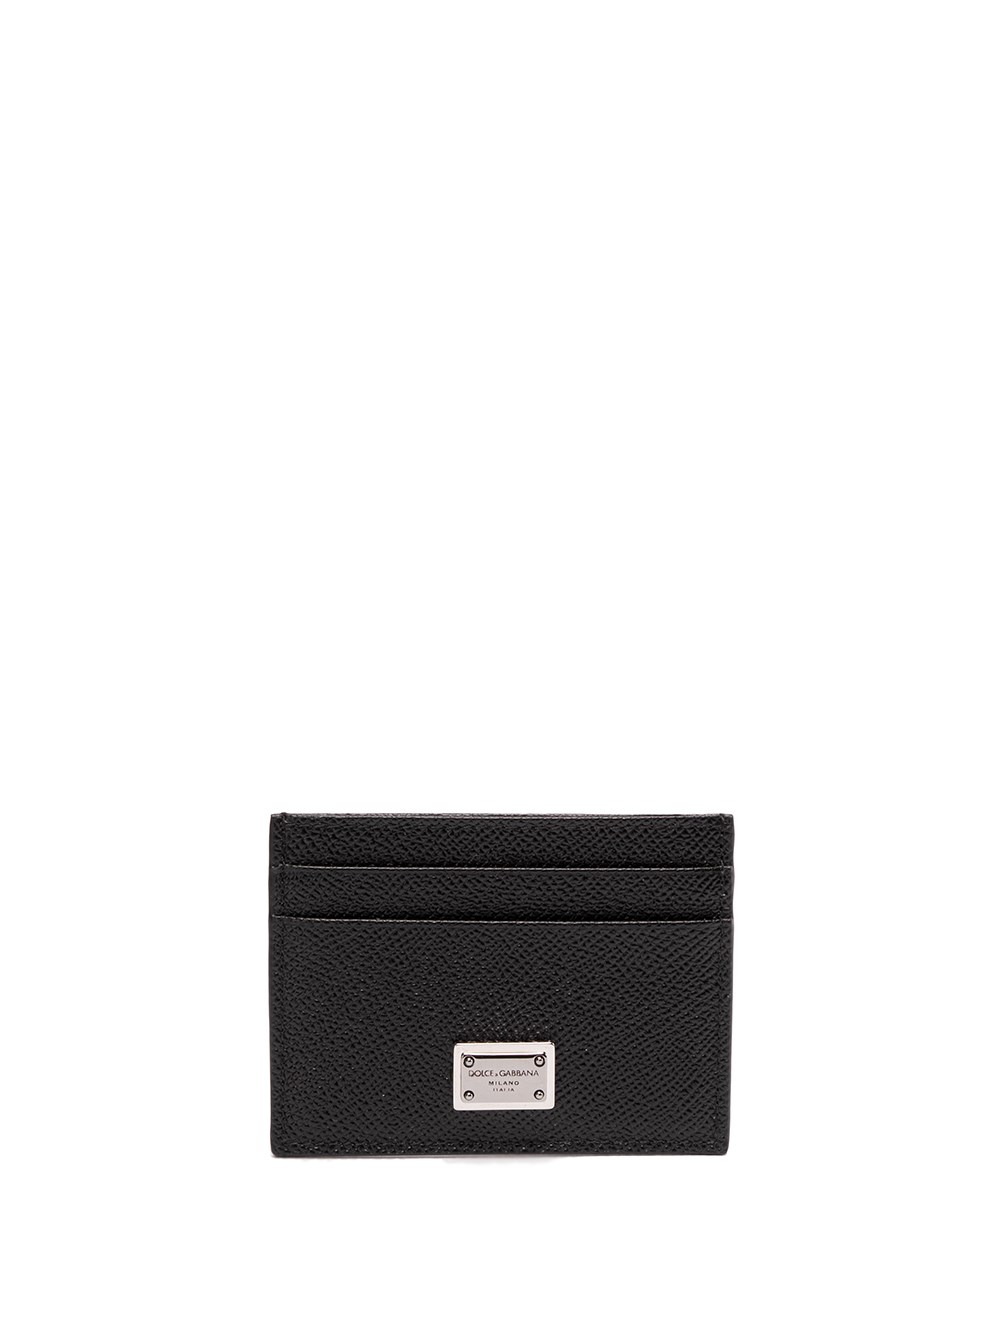 Dolce & Gabbana Credit Card Case In Black  